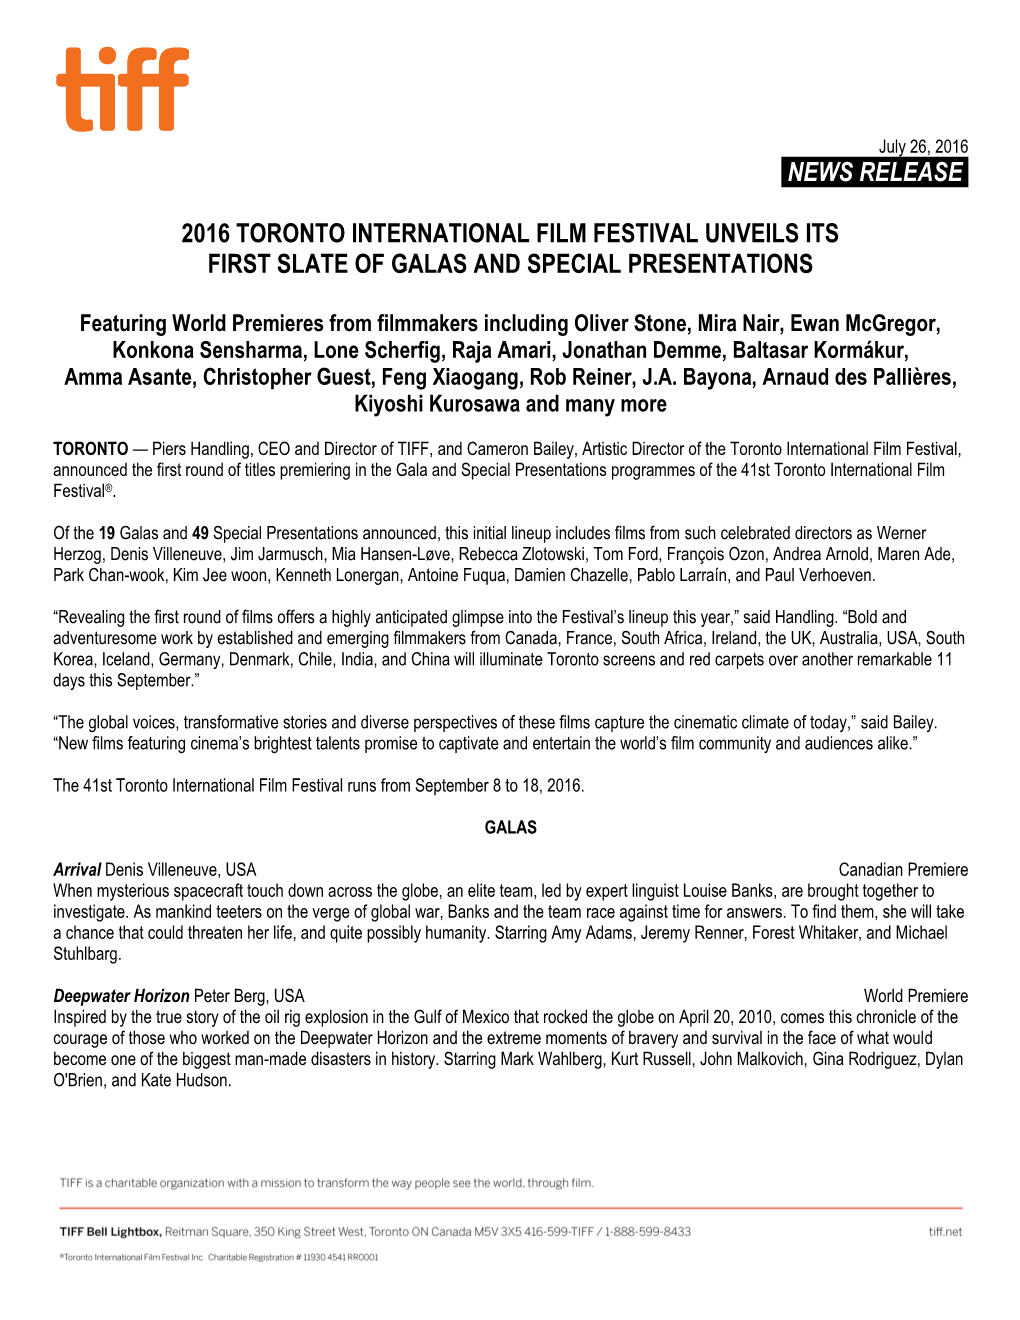 News Release. 2016 Toronto International Film Festival